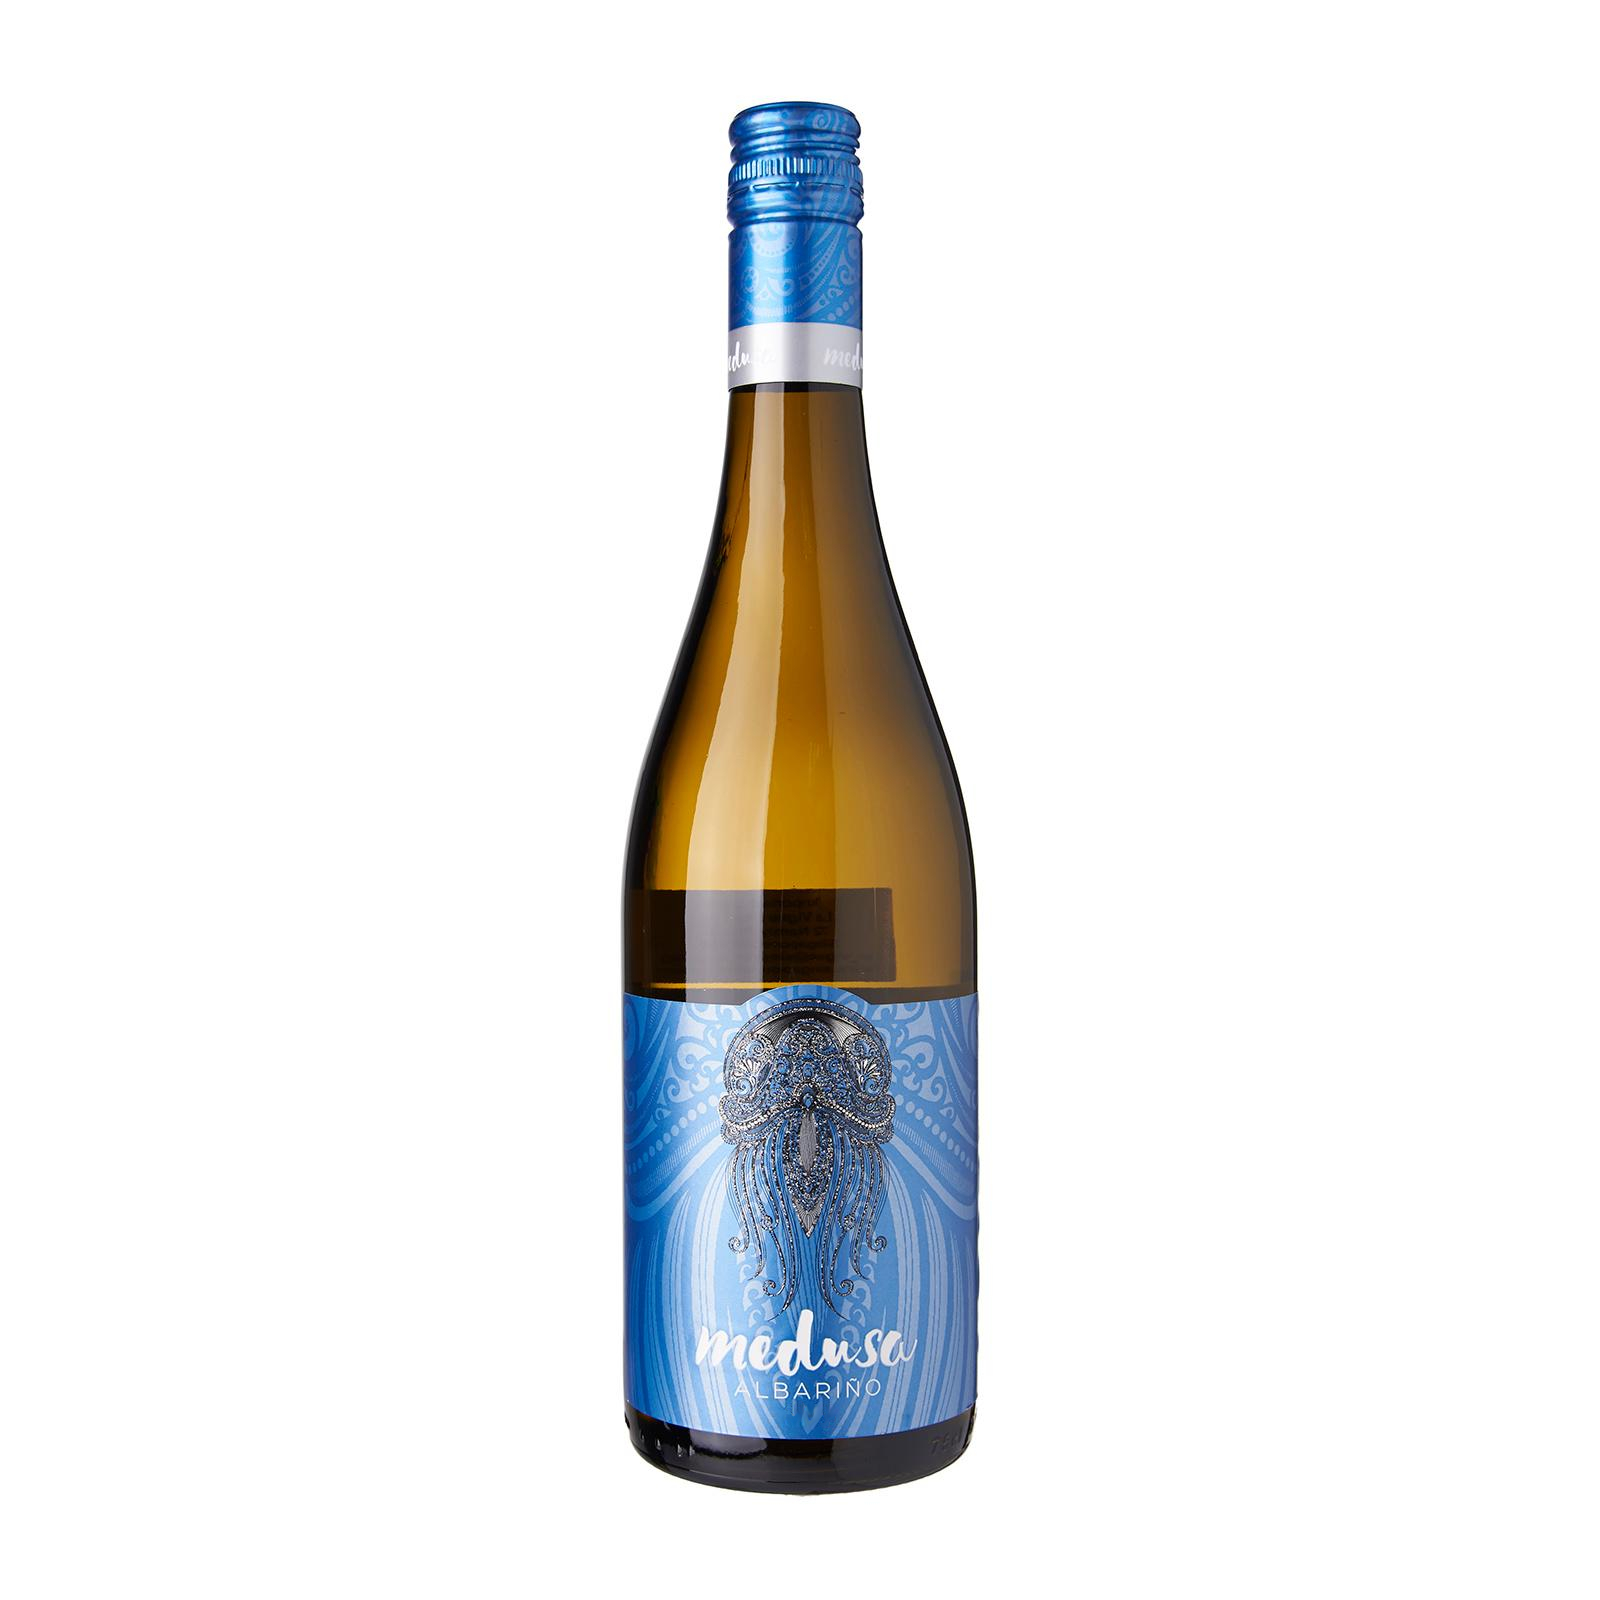 Medusa Albarino 2021 White Wine – Rias Baixas, Spain